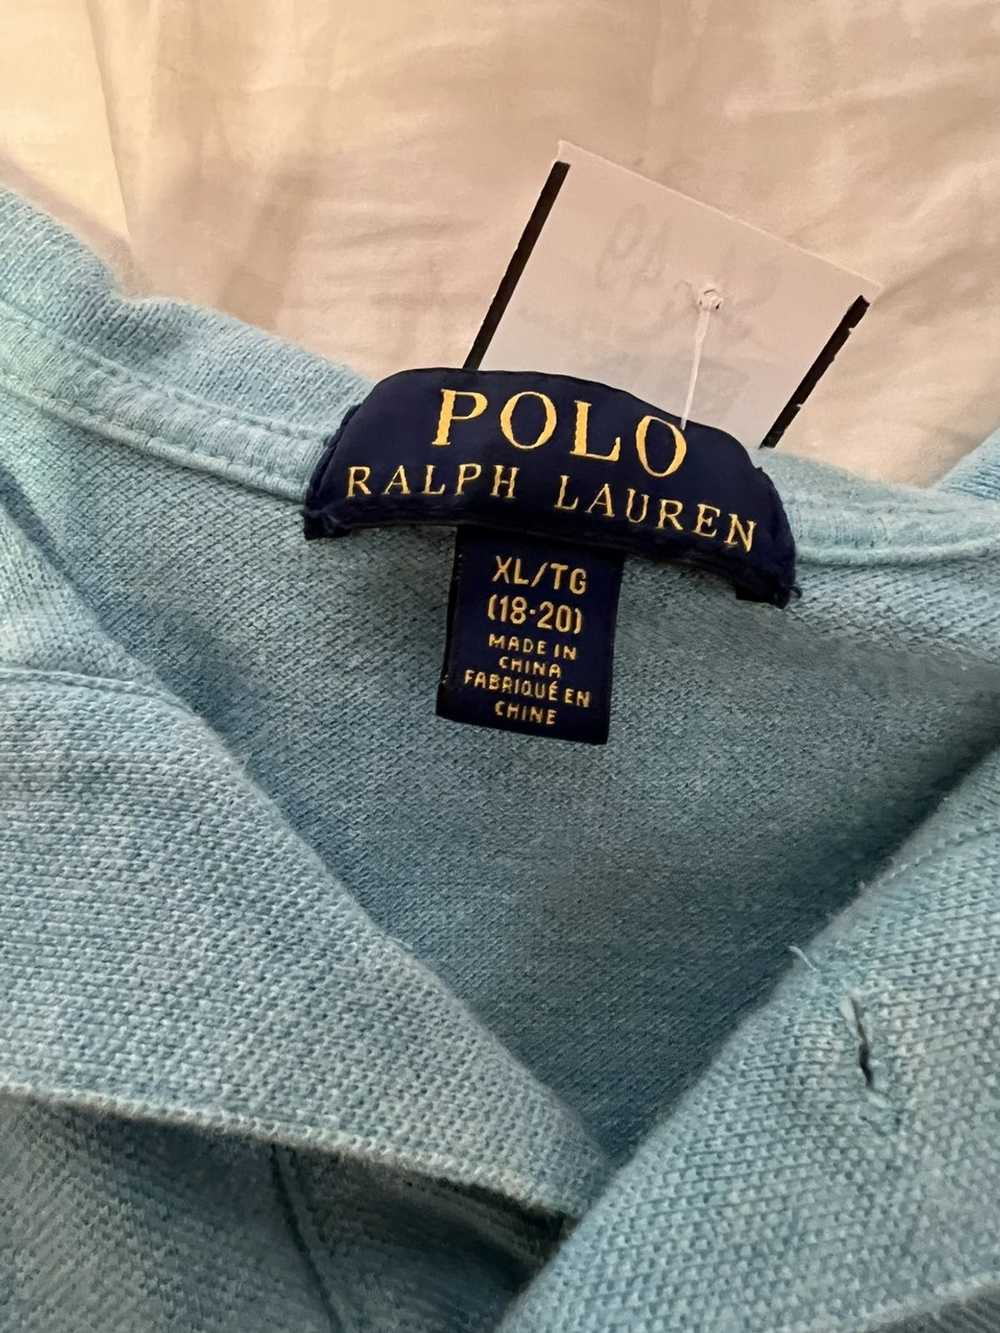 Polo Ralph Lauren Vintage Polo collared shirt - image 2